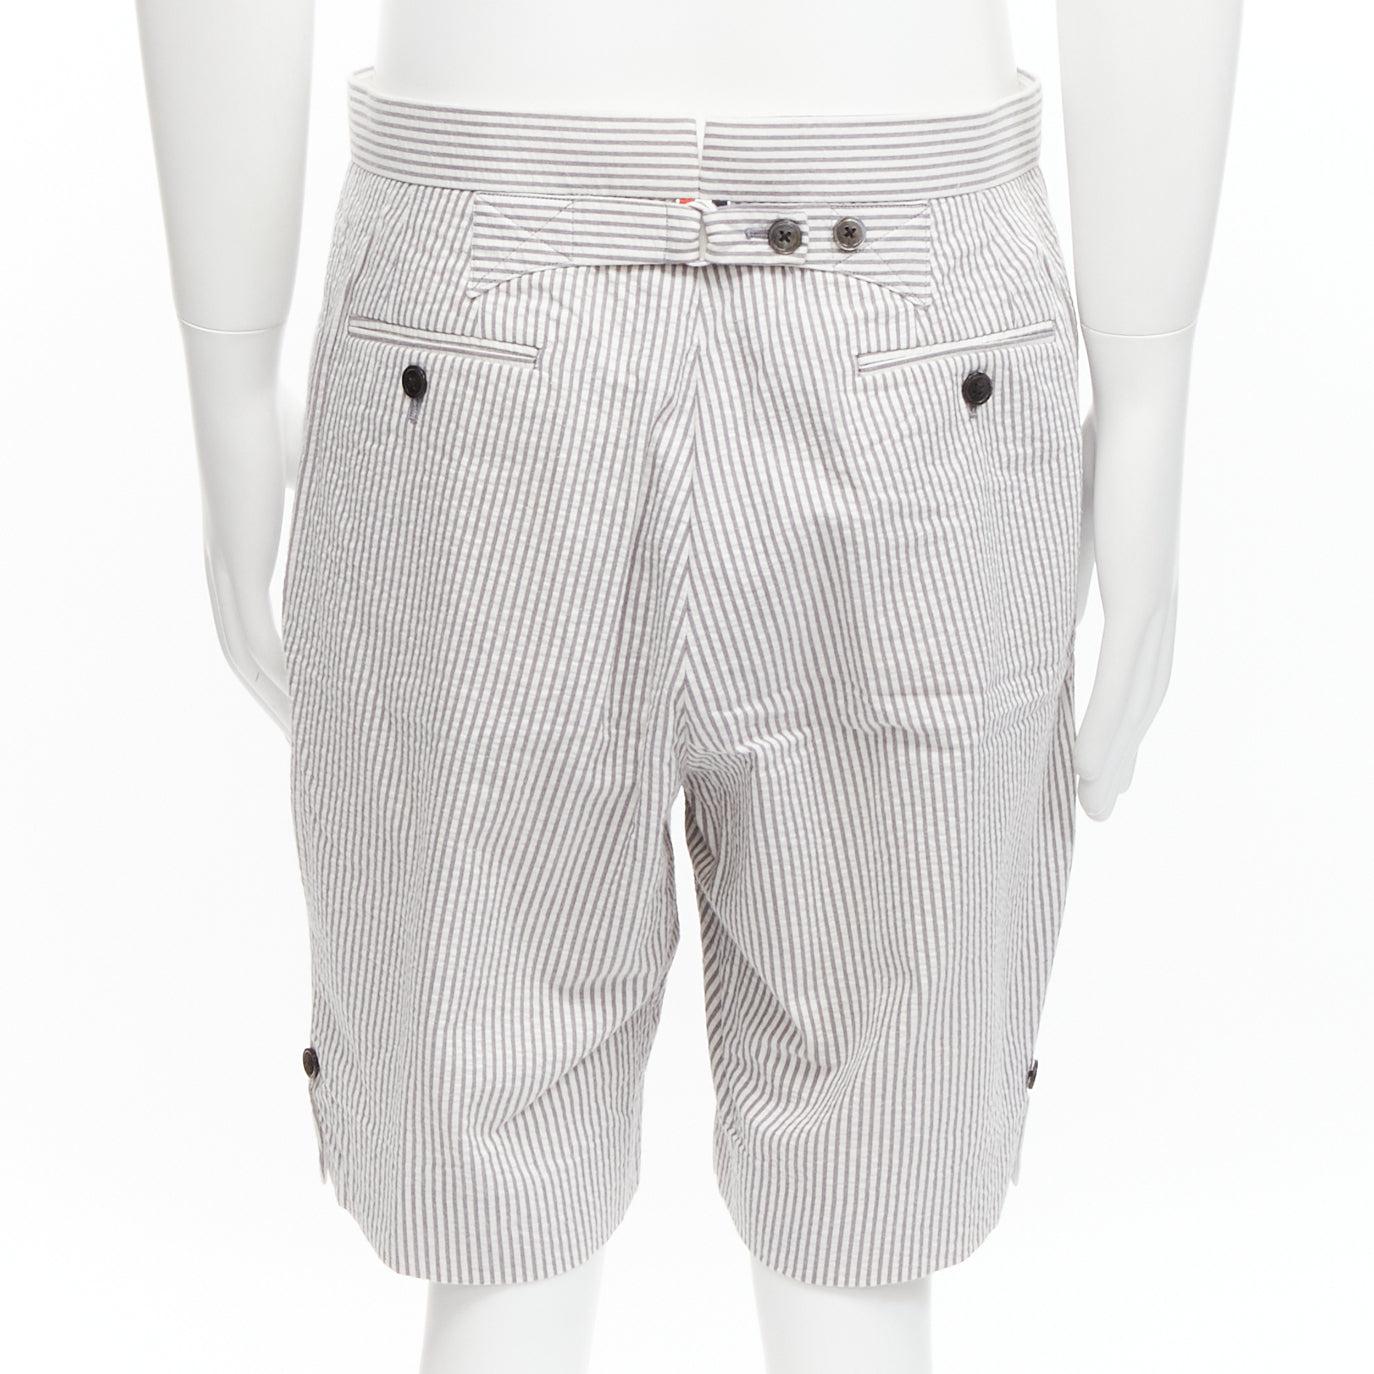 THOM BROWNE grey white striped seersucker blazer jacket shorts suit Sz. 3 L For Sale 6